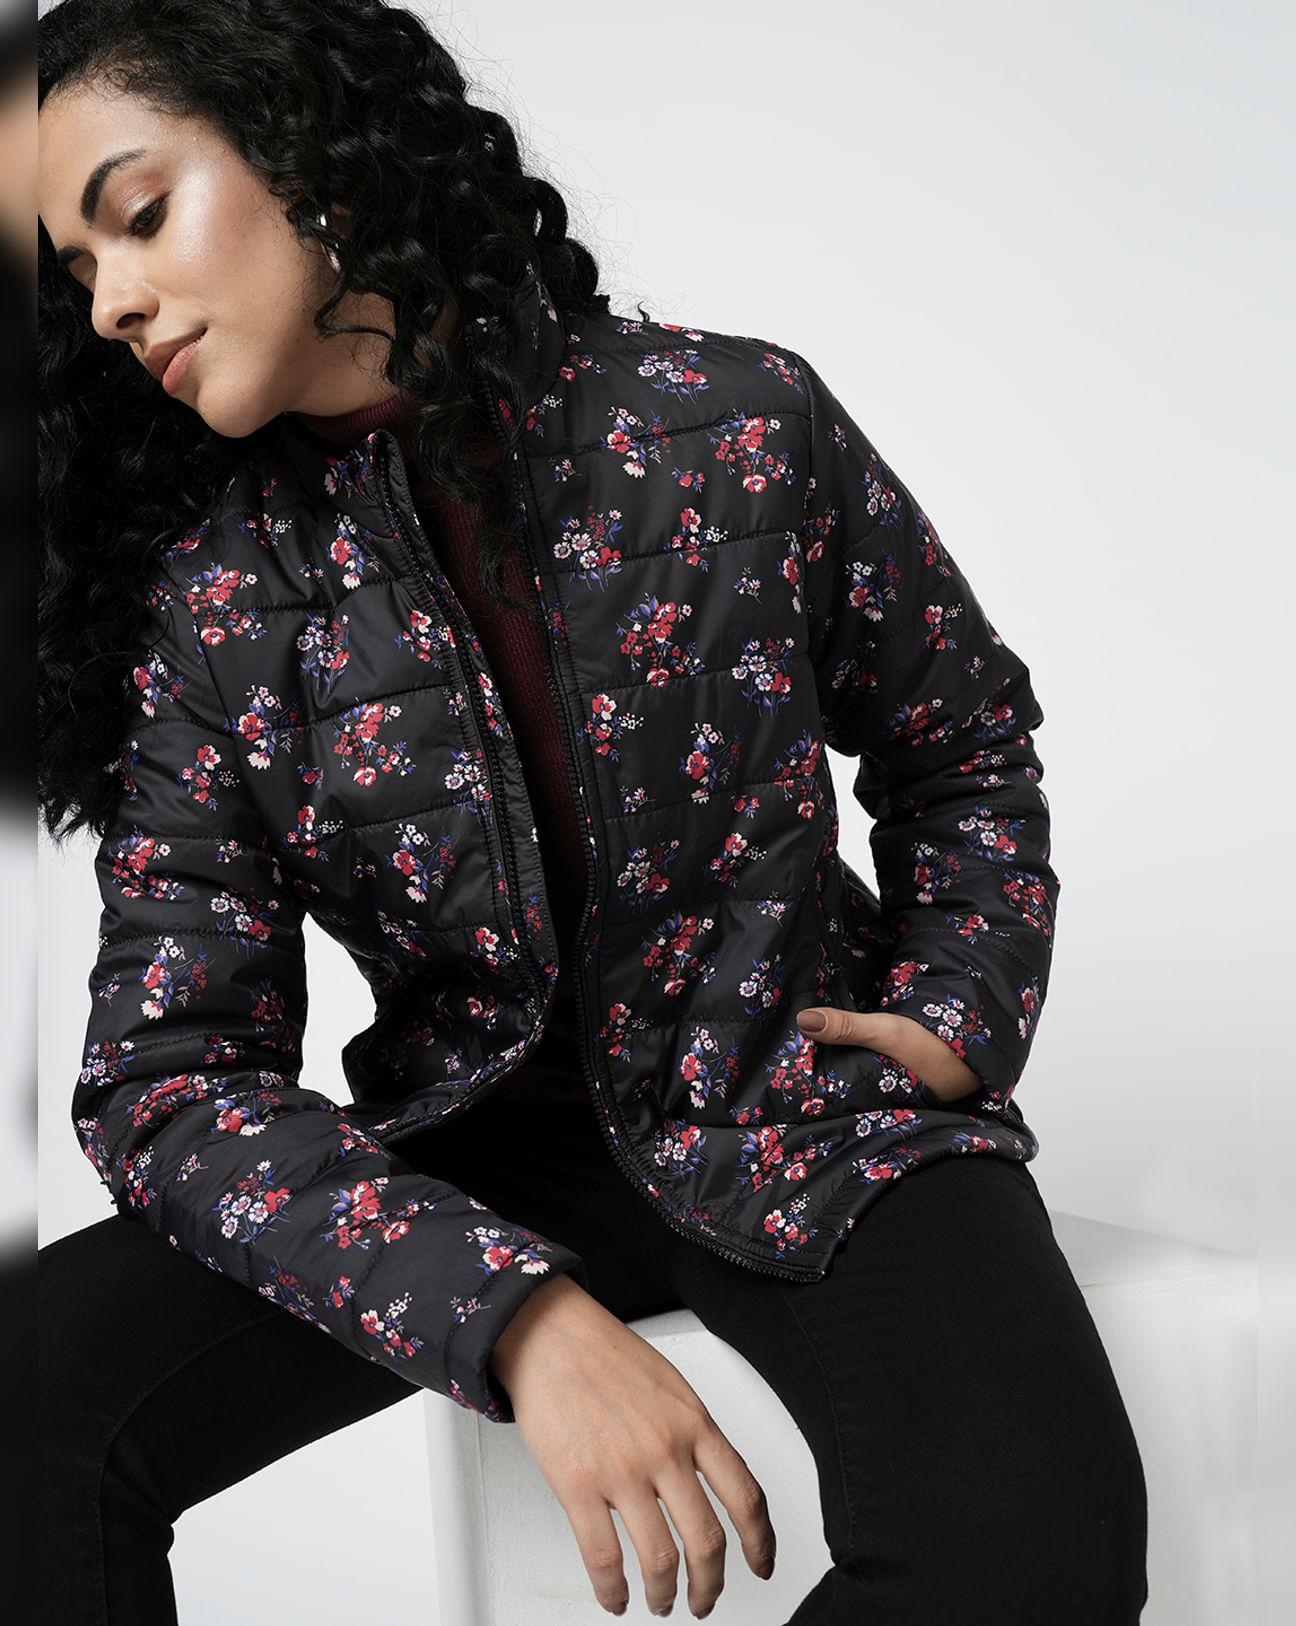 i.scenery by vero moda black floral print jacket